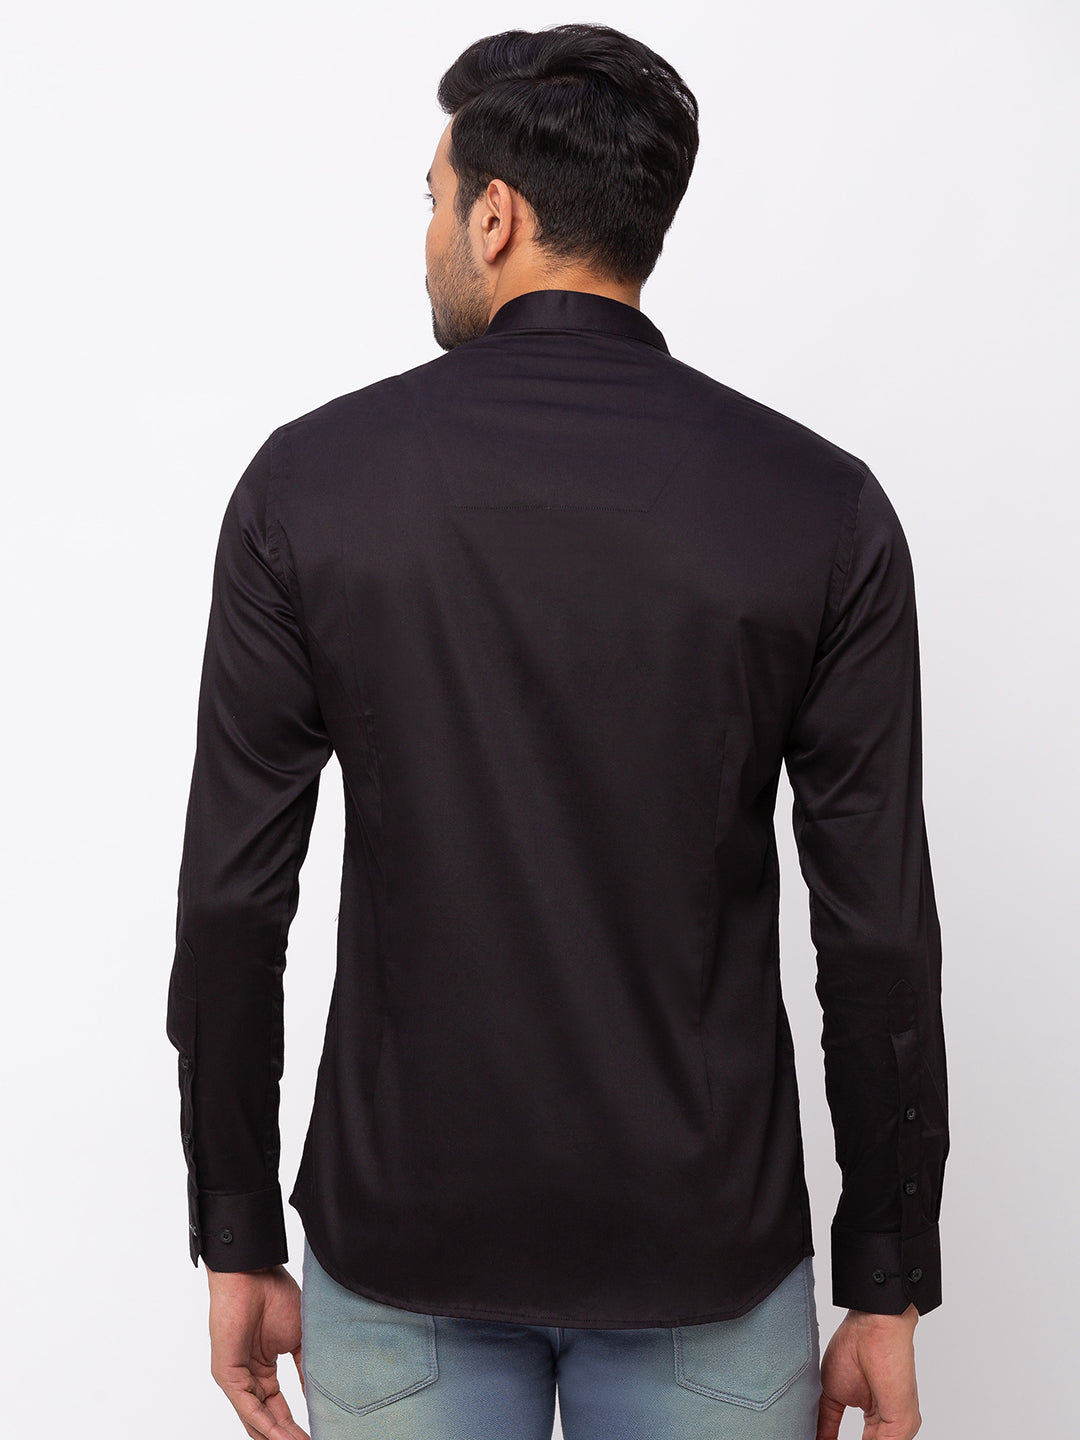 Black Formal Shirt with Mandarin Collar